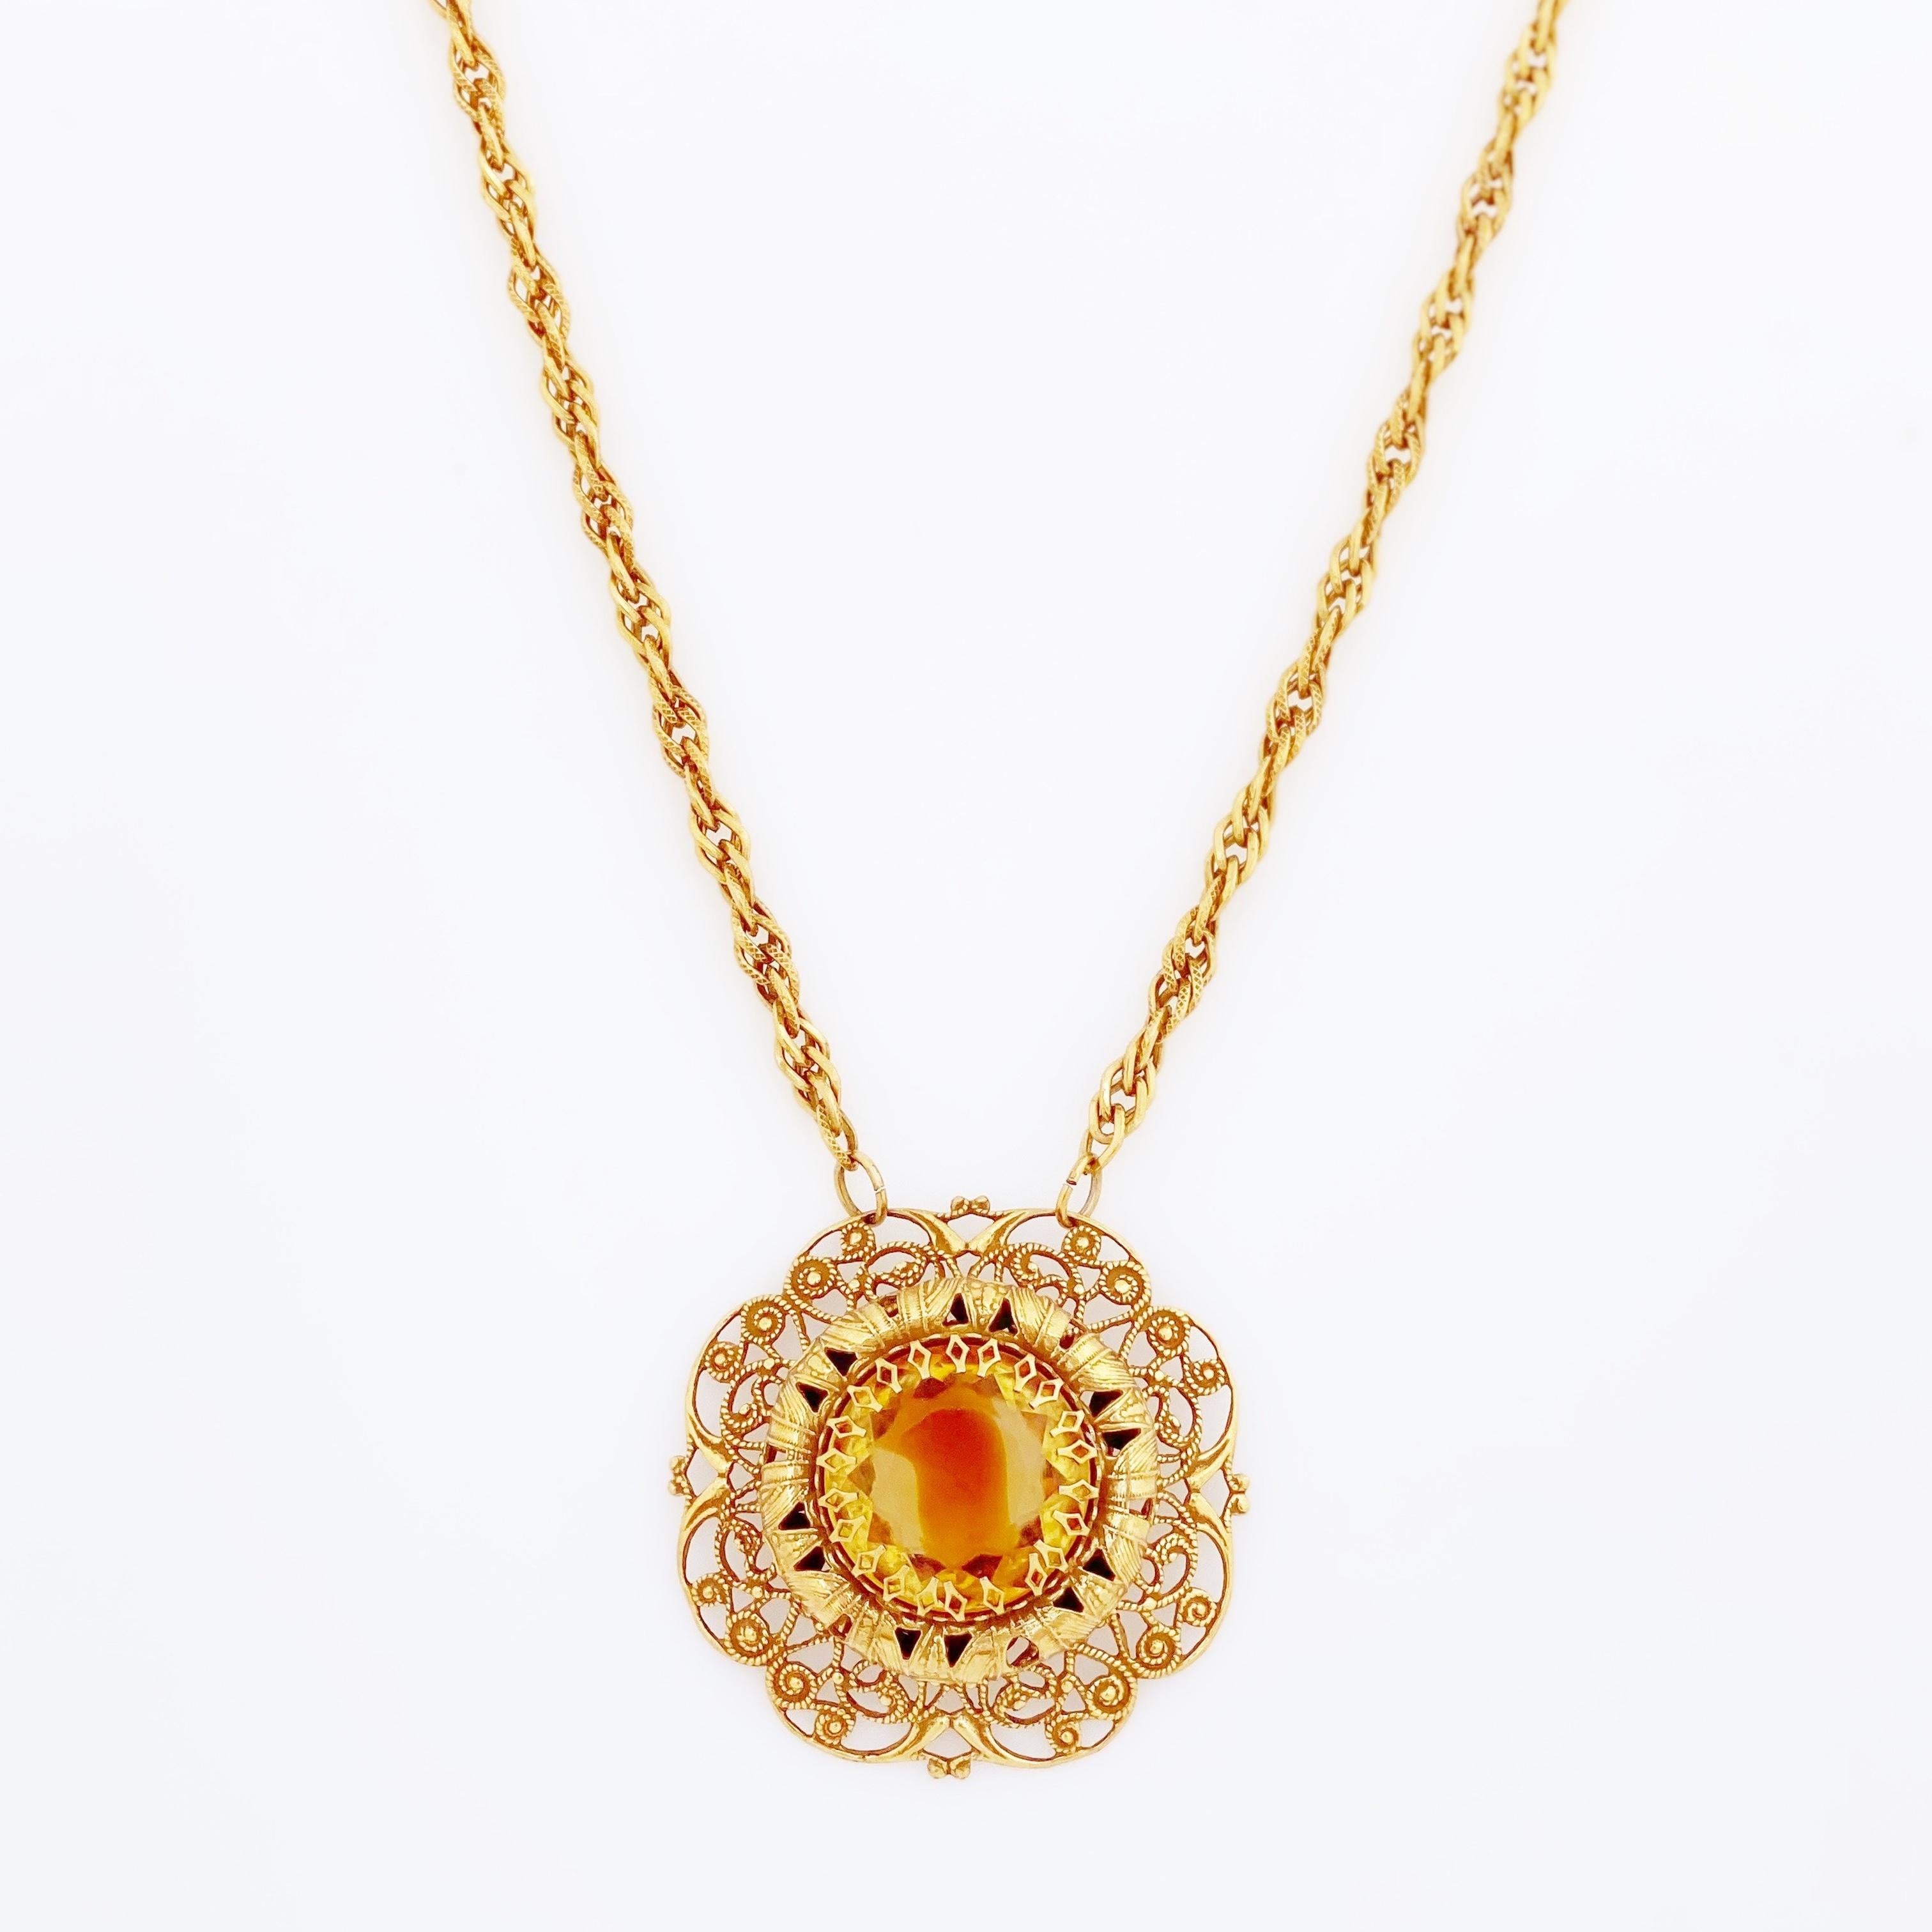 medallion necklaces 1960s